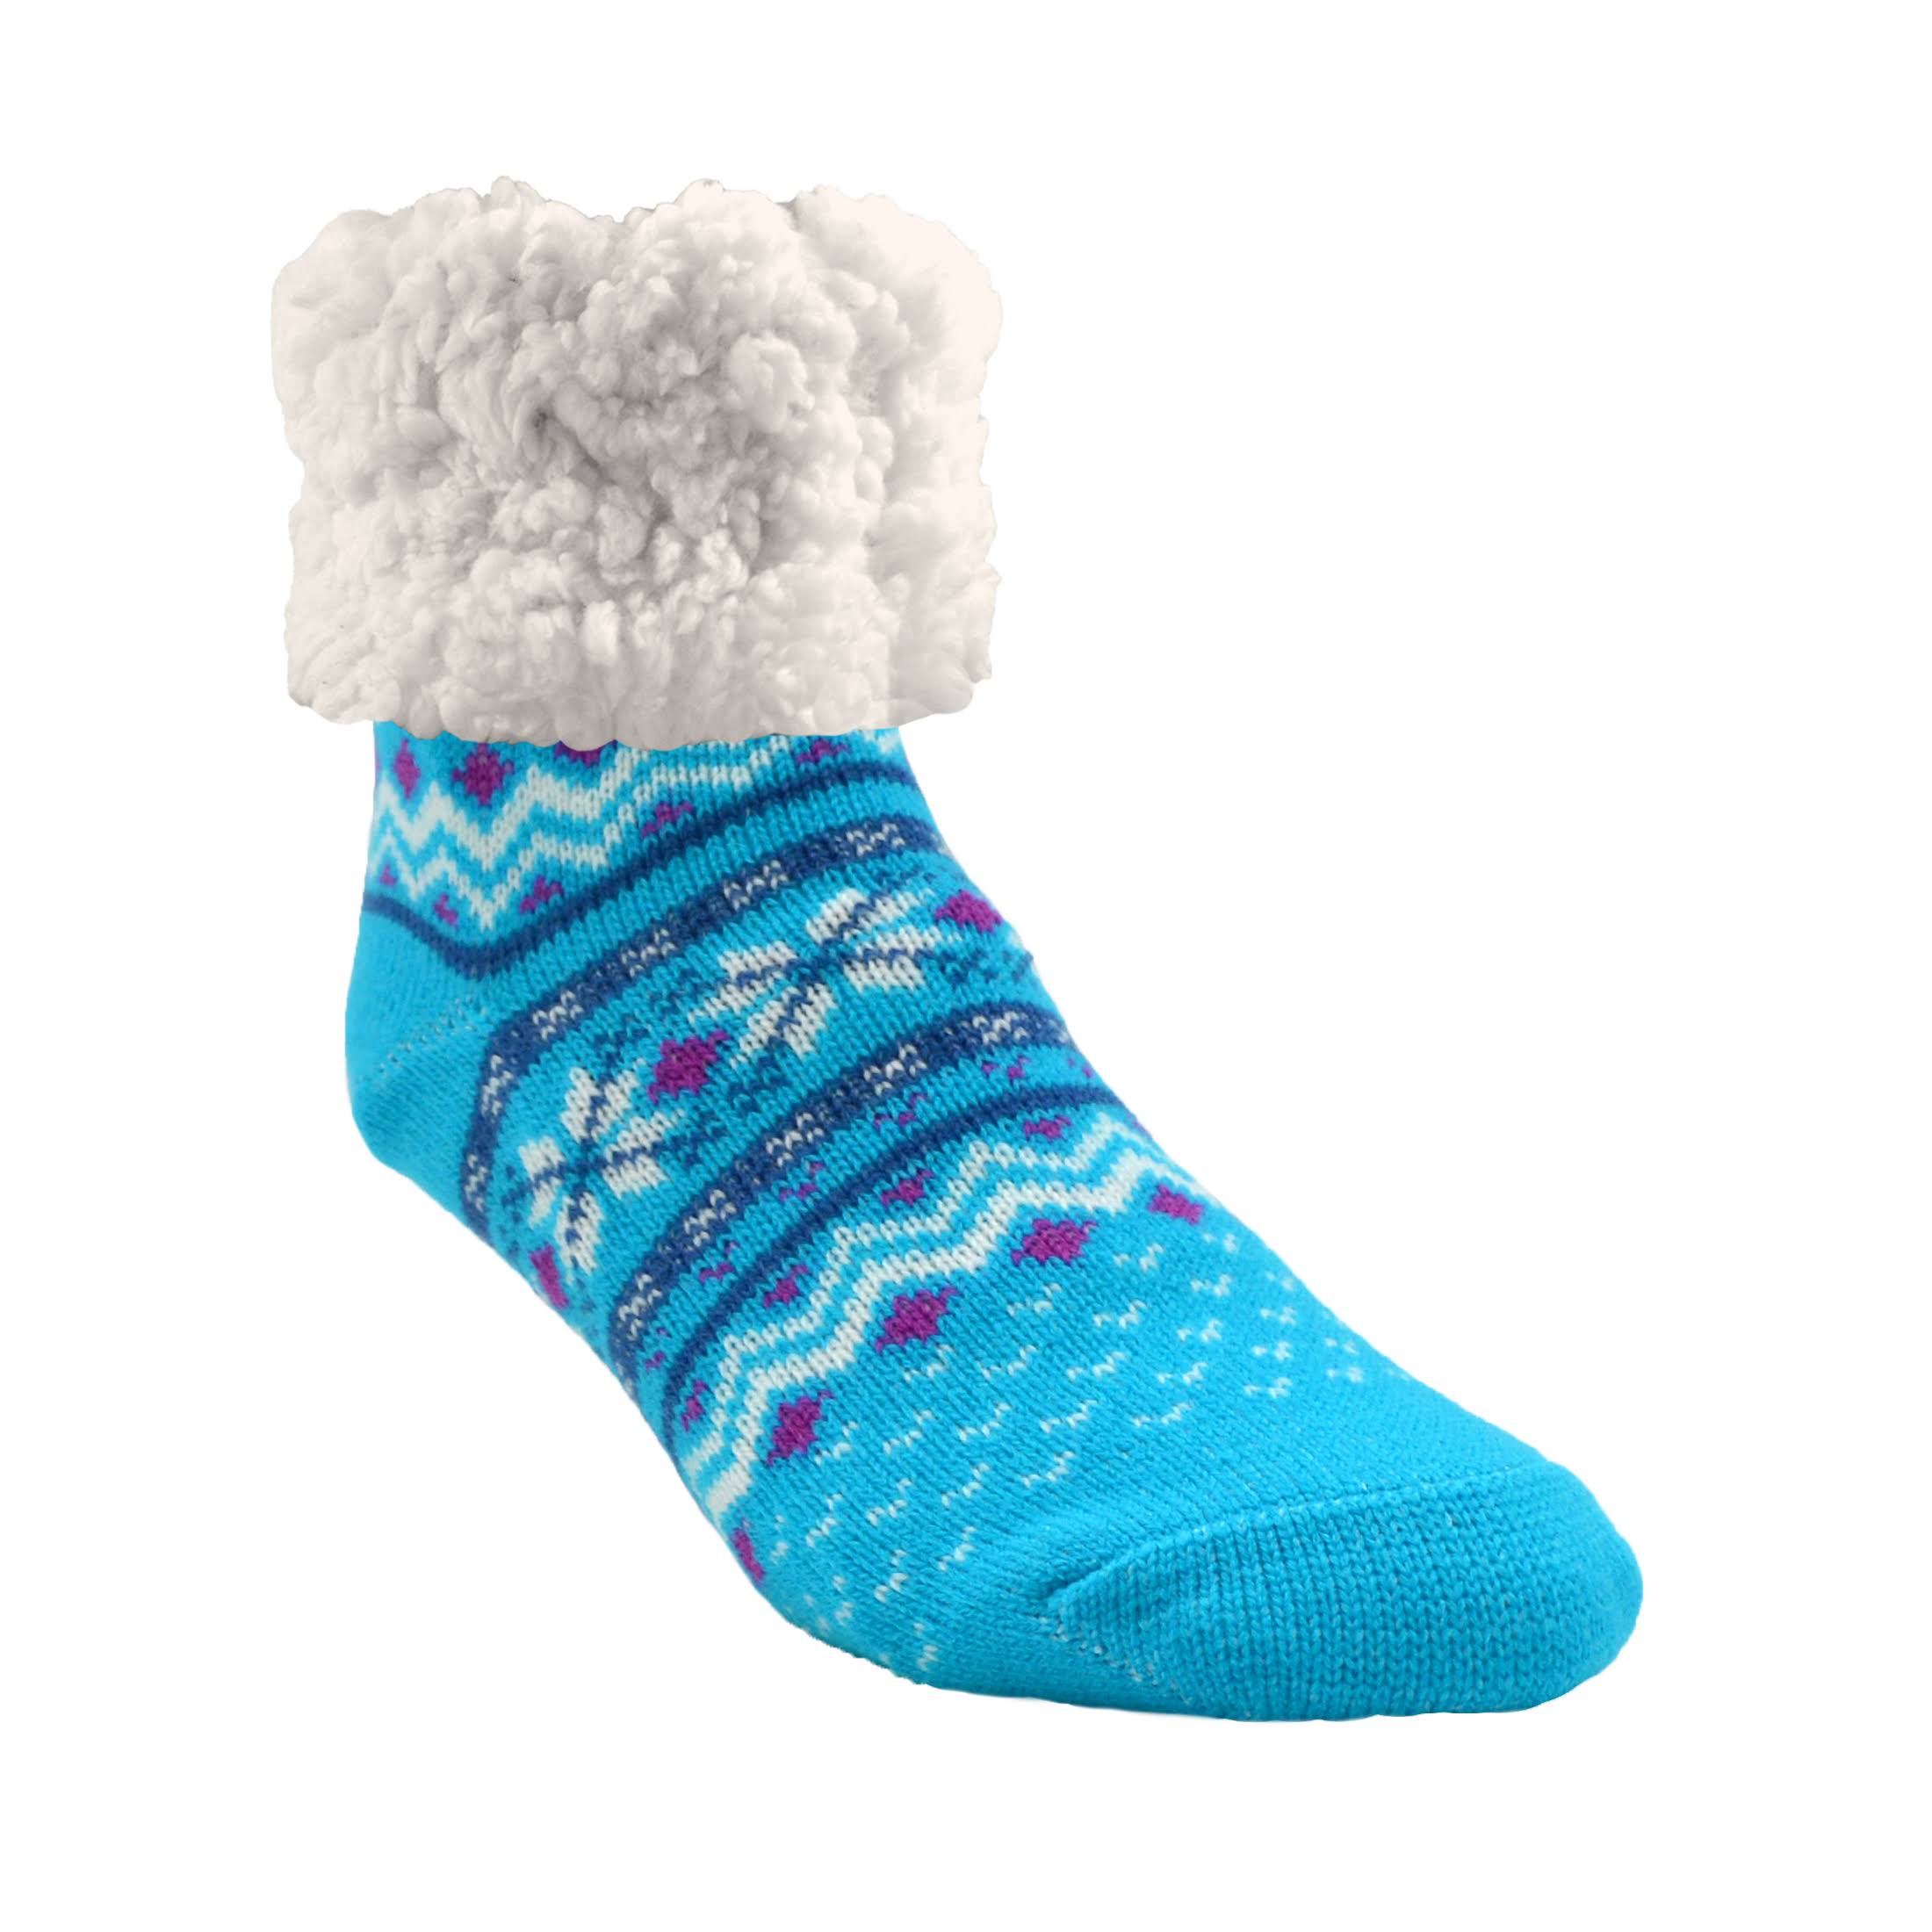 Piika Slipper Socks - Winter Blue